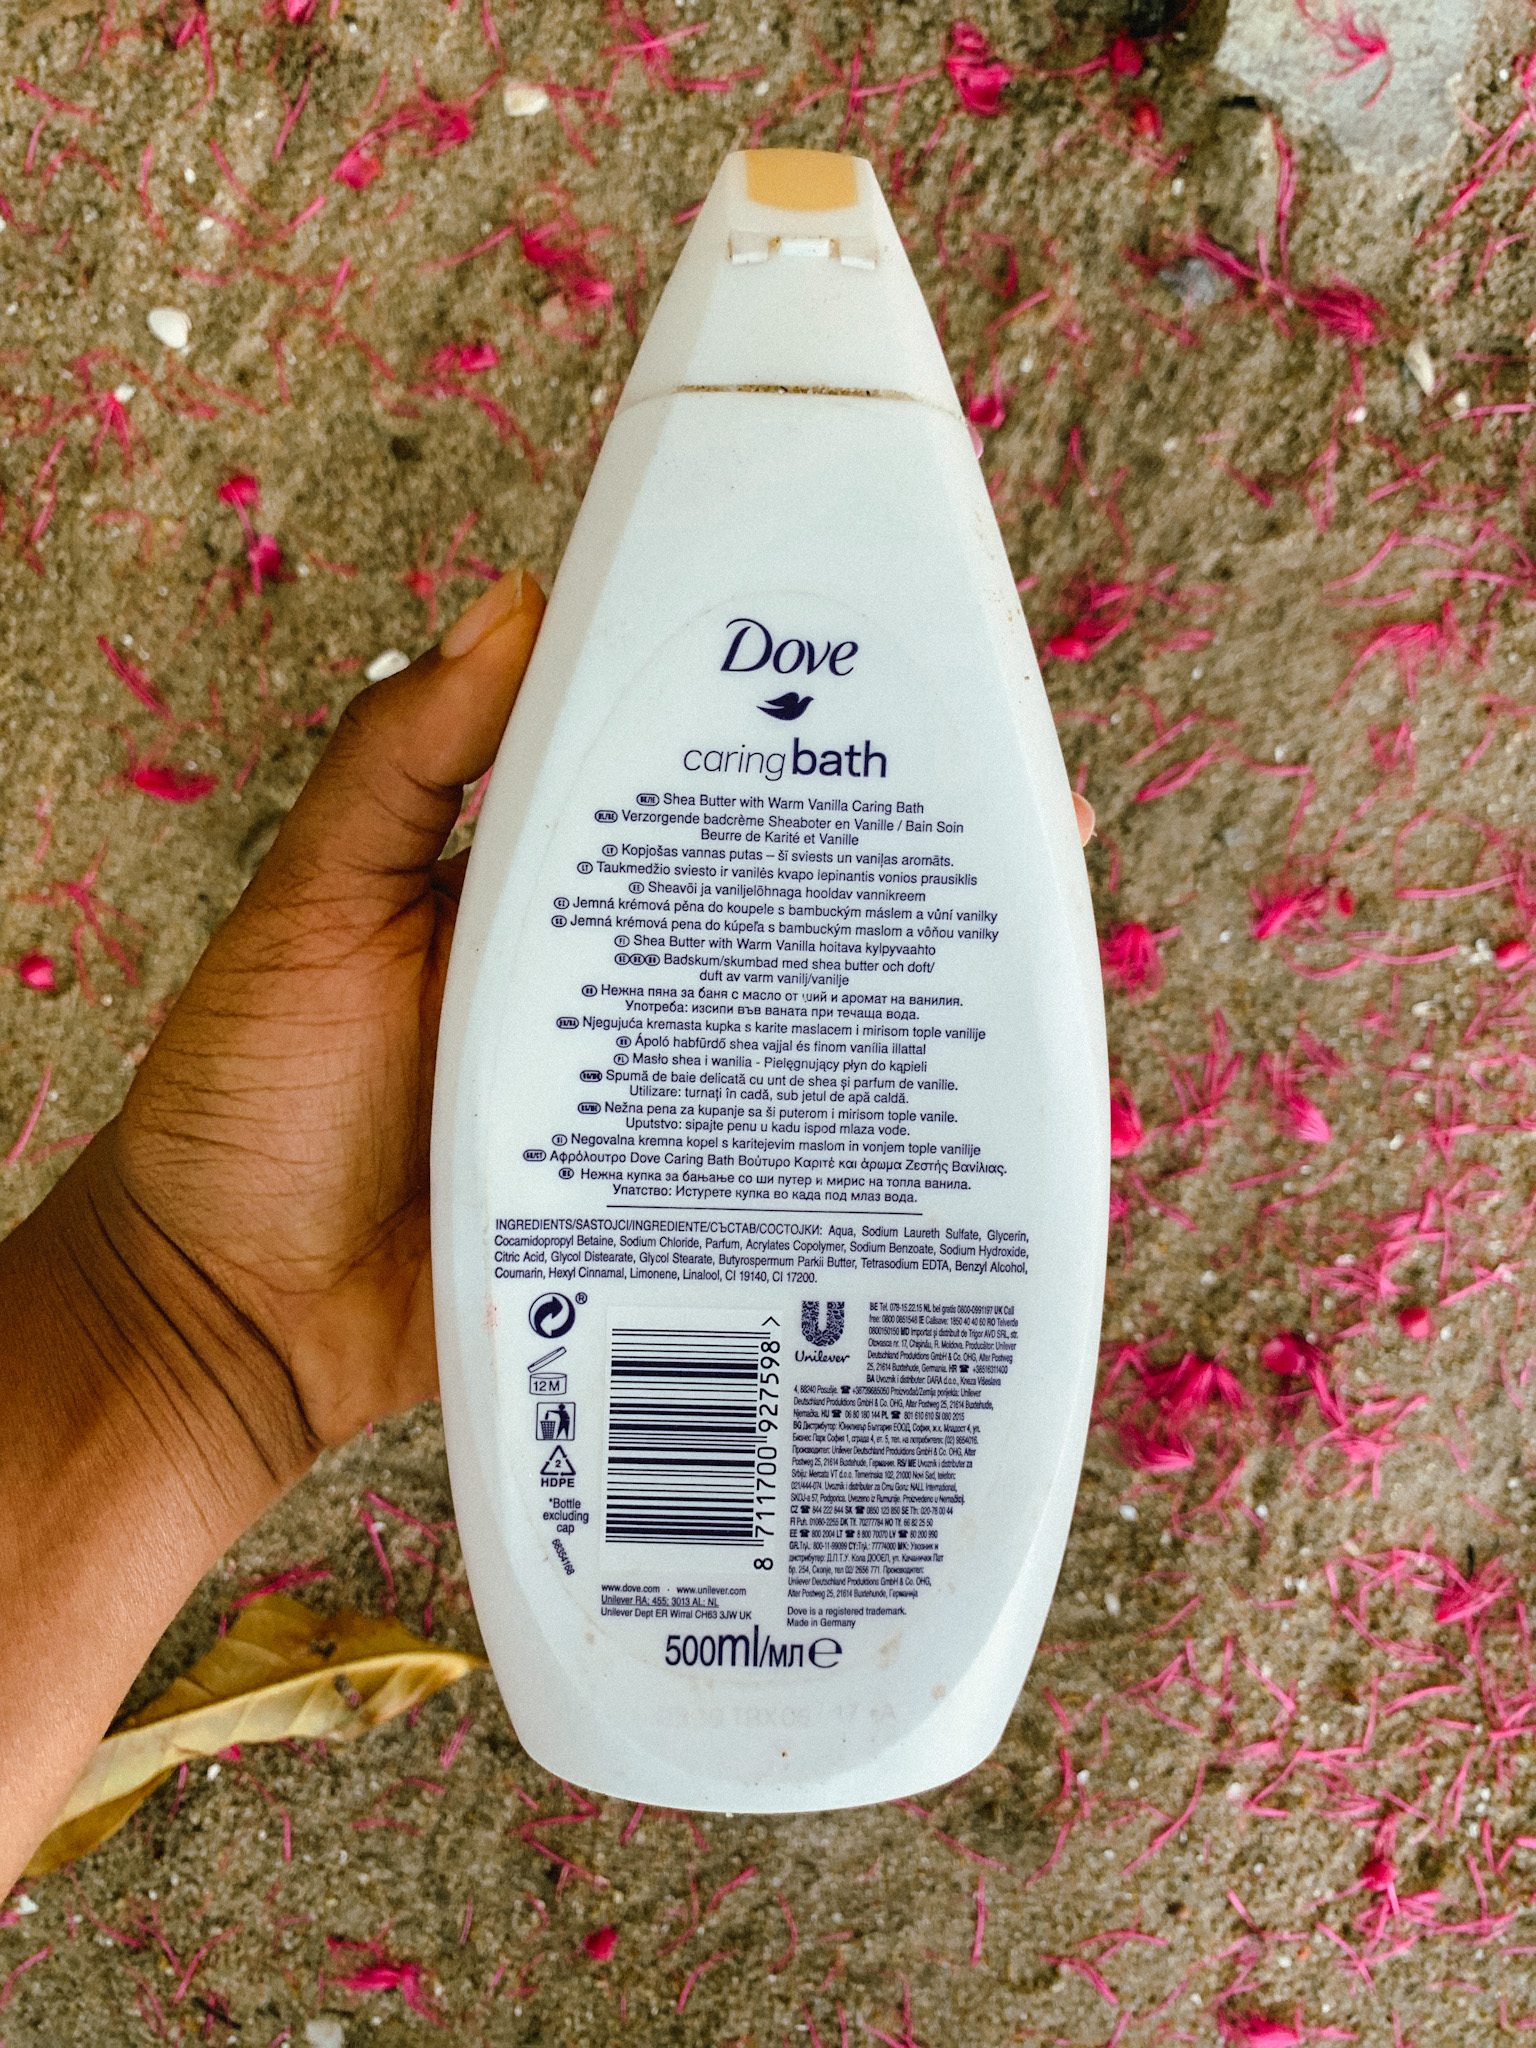 Dove caring bath liquid soap skincare empties review